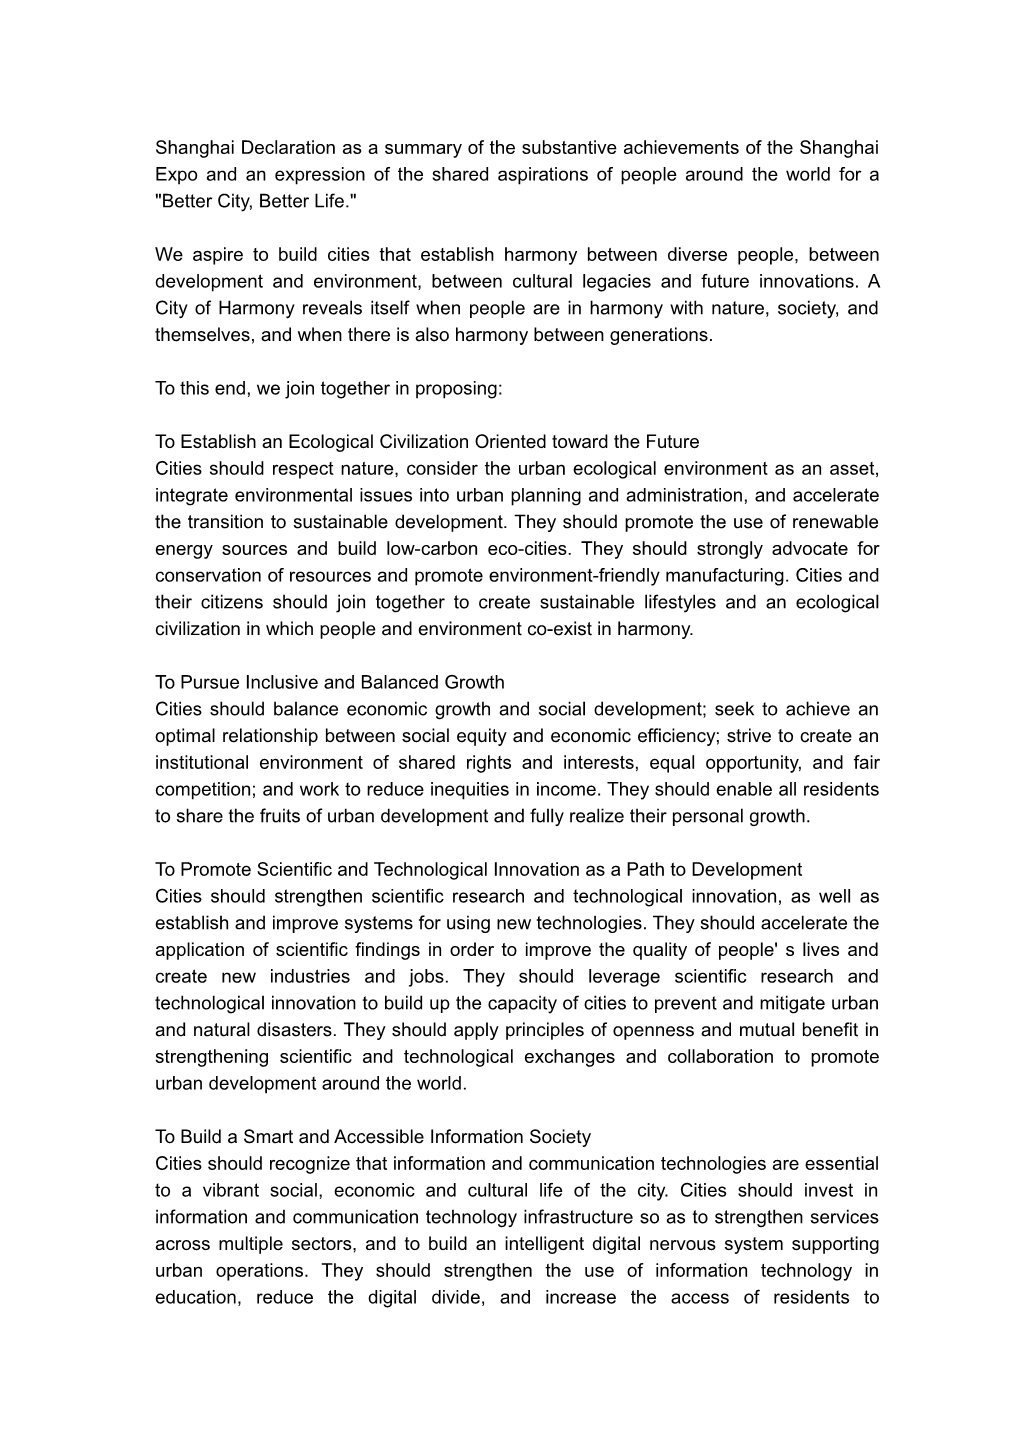 Full Text of Shanghai Declaration